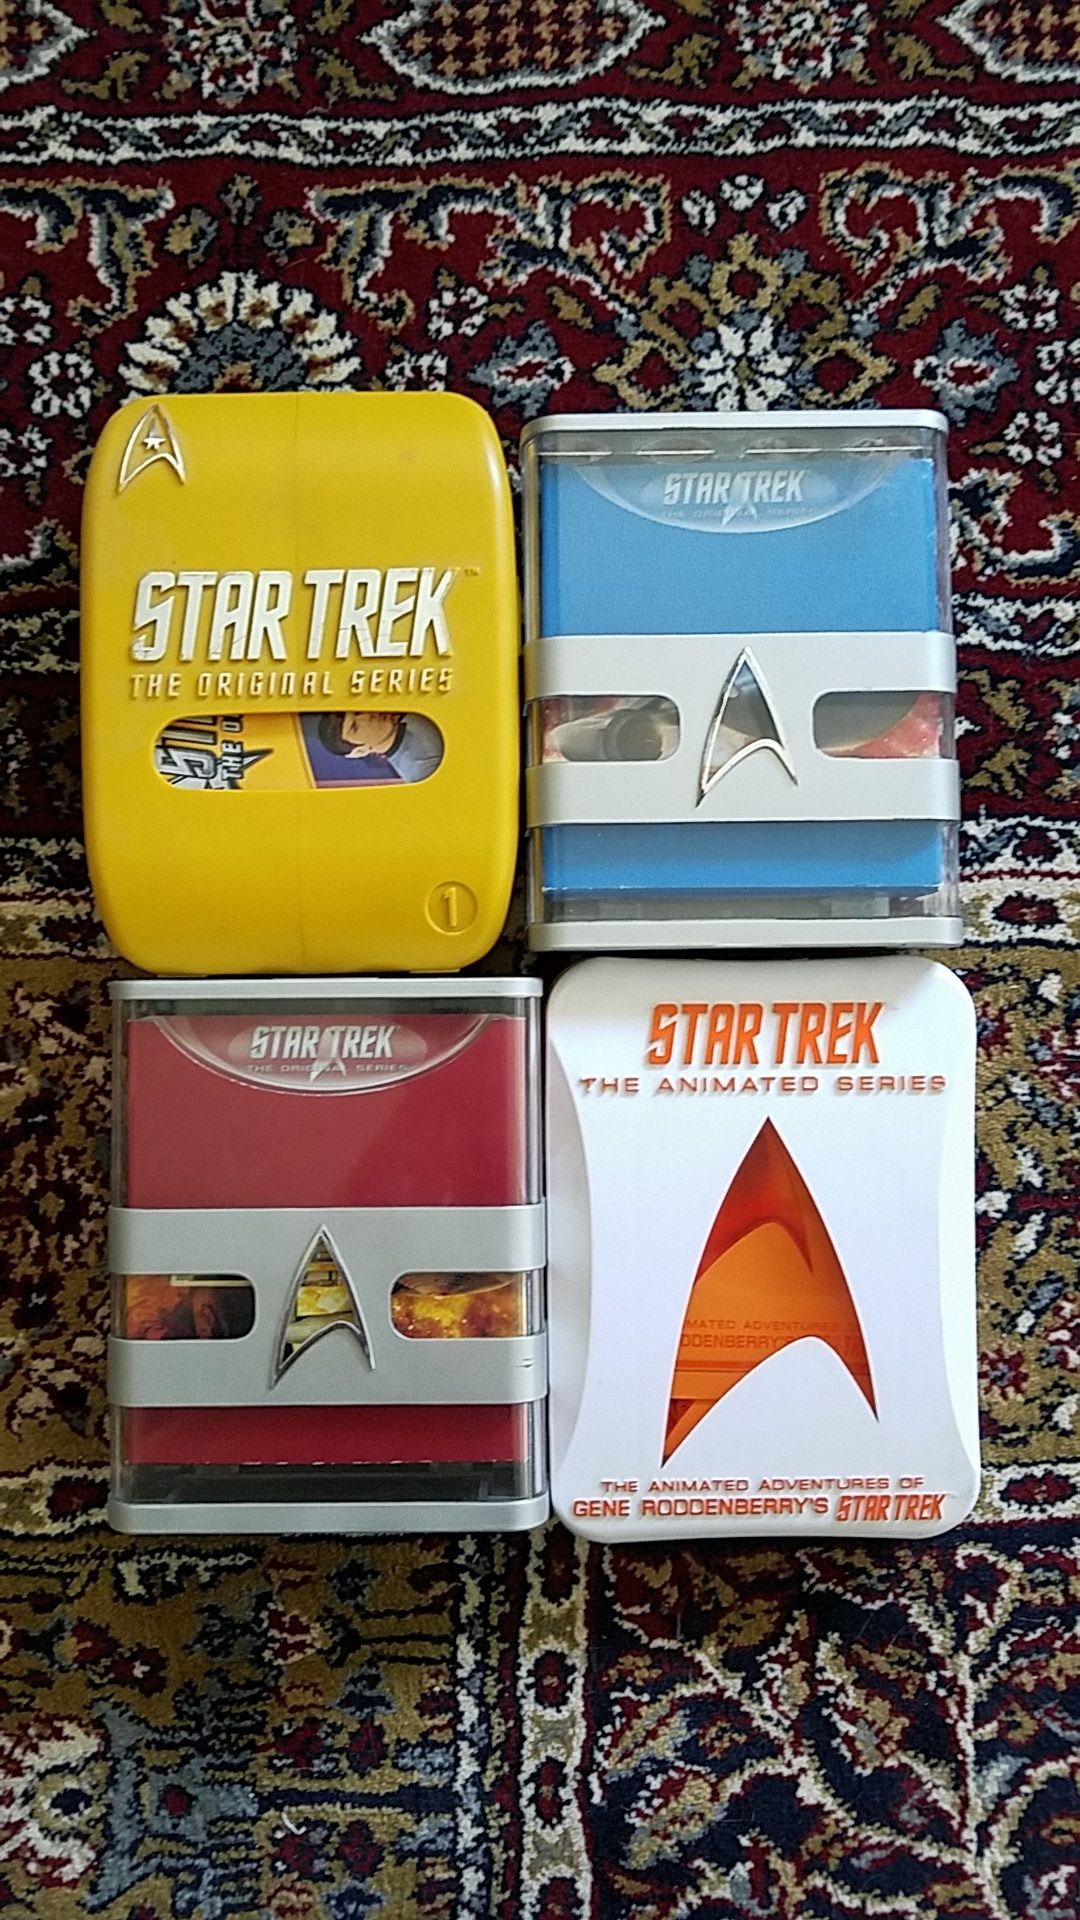 Star Trek Original Series and Animated Series DVDs